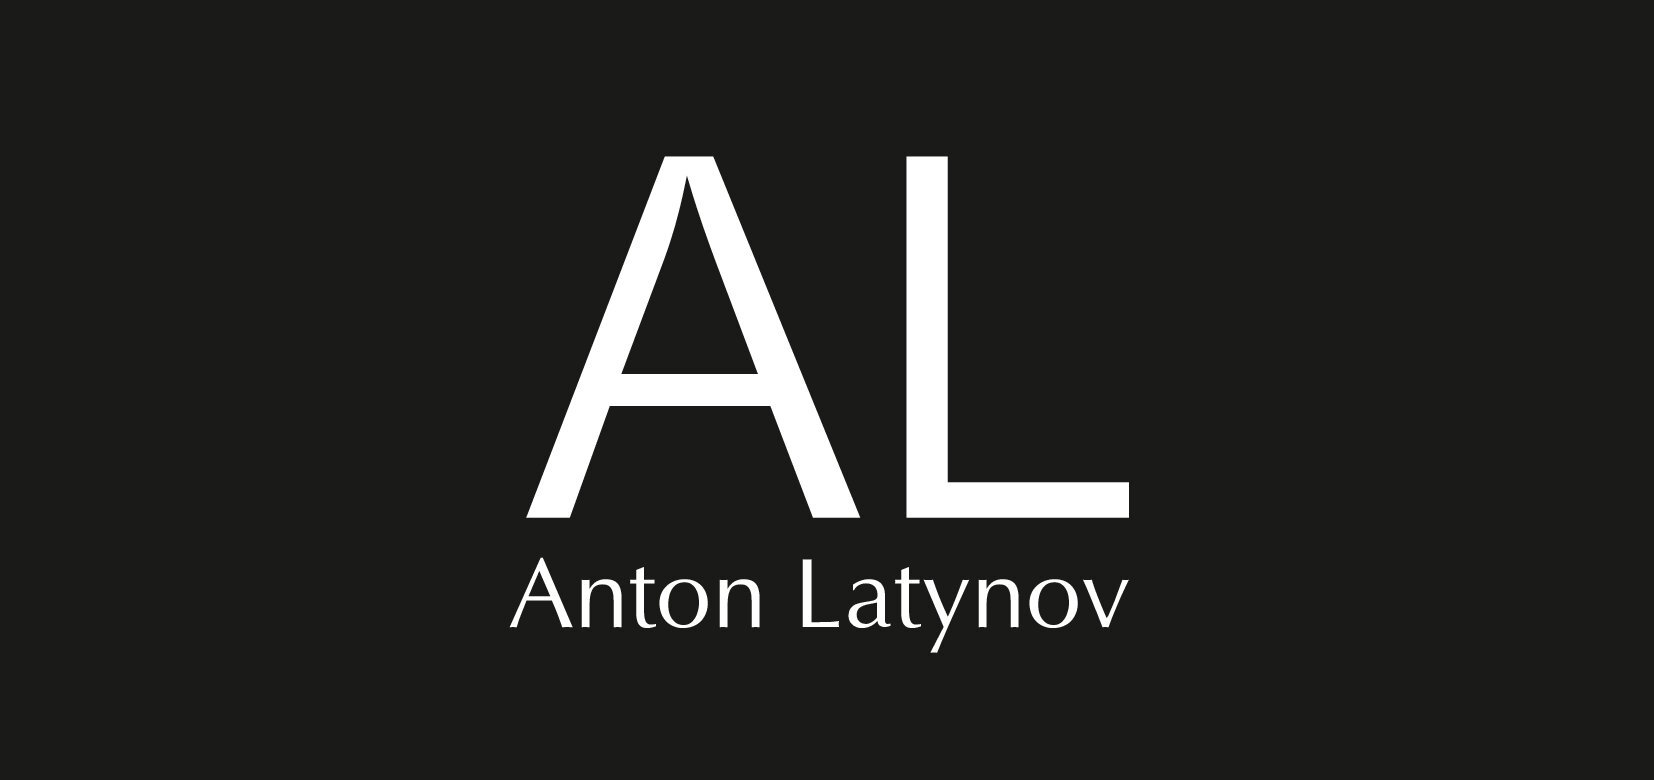 Anton Latynov : Brand Short Description Type Here.